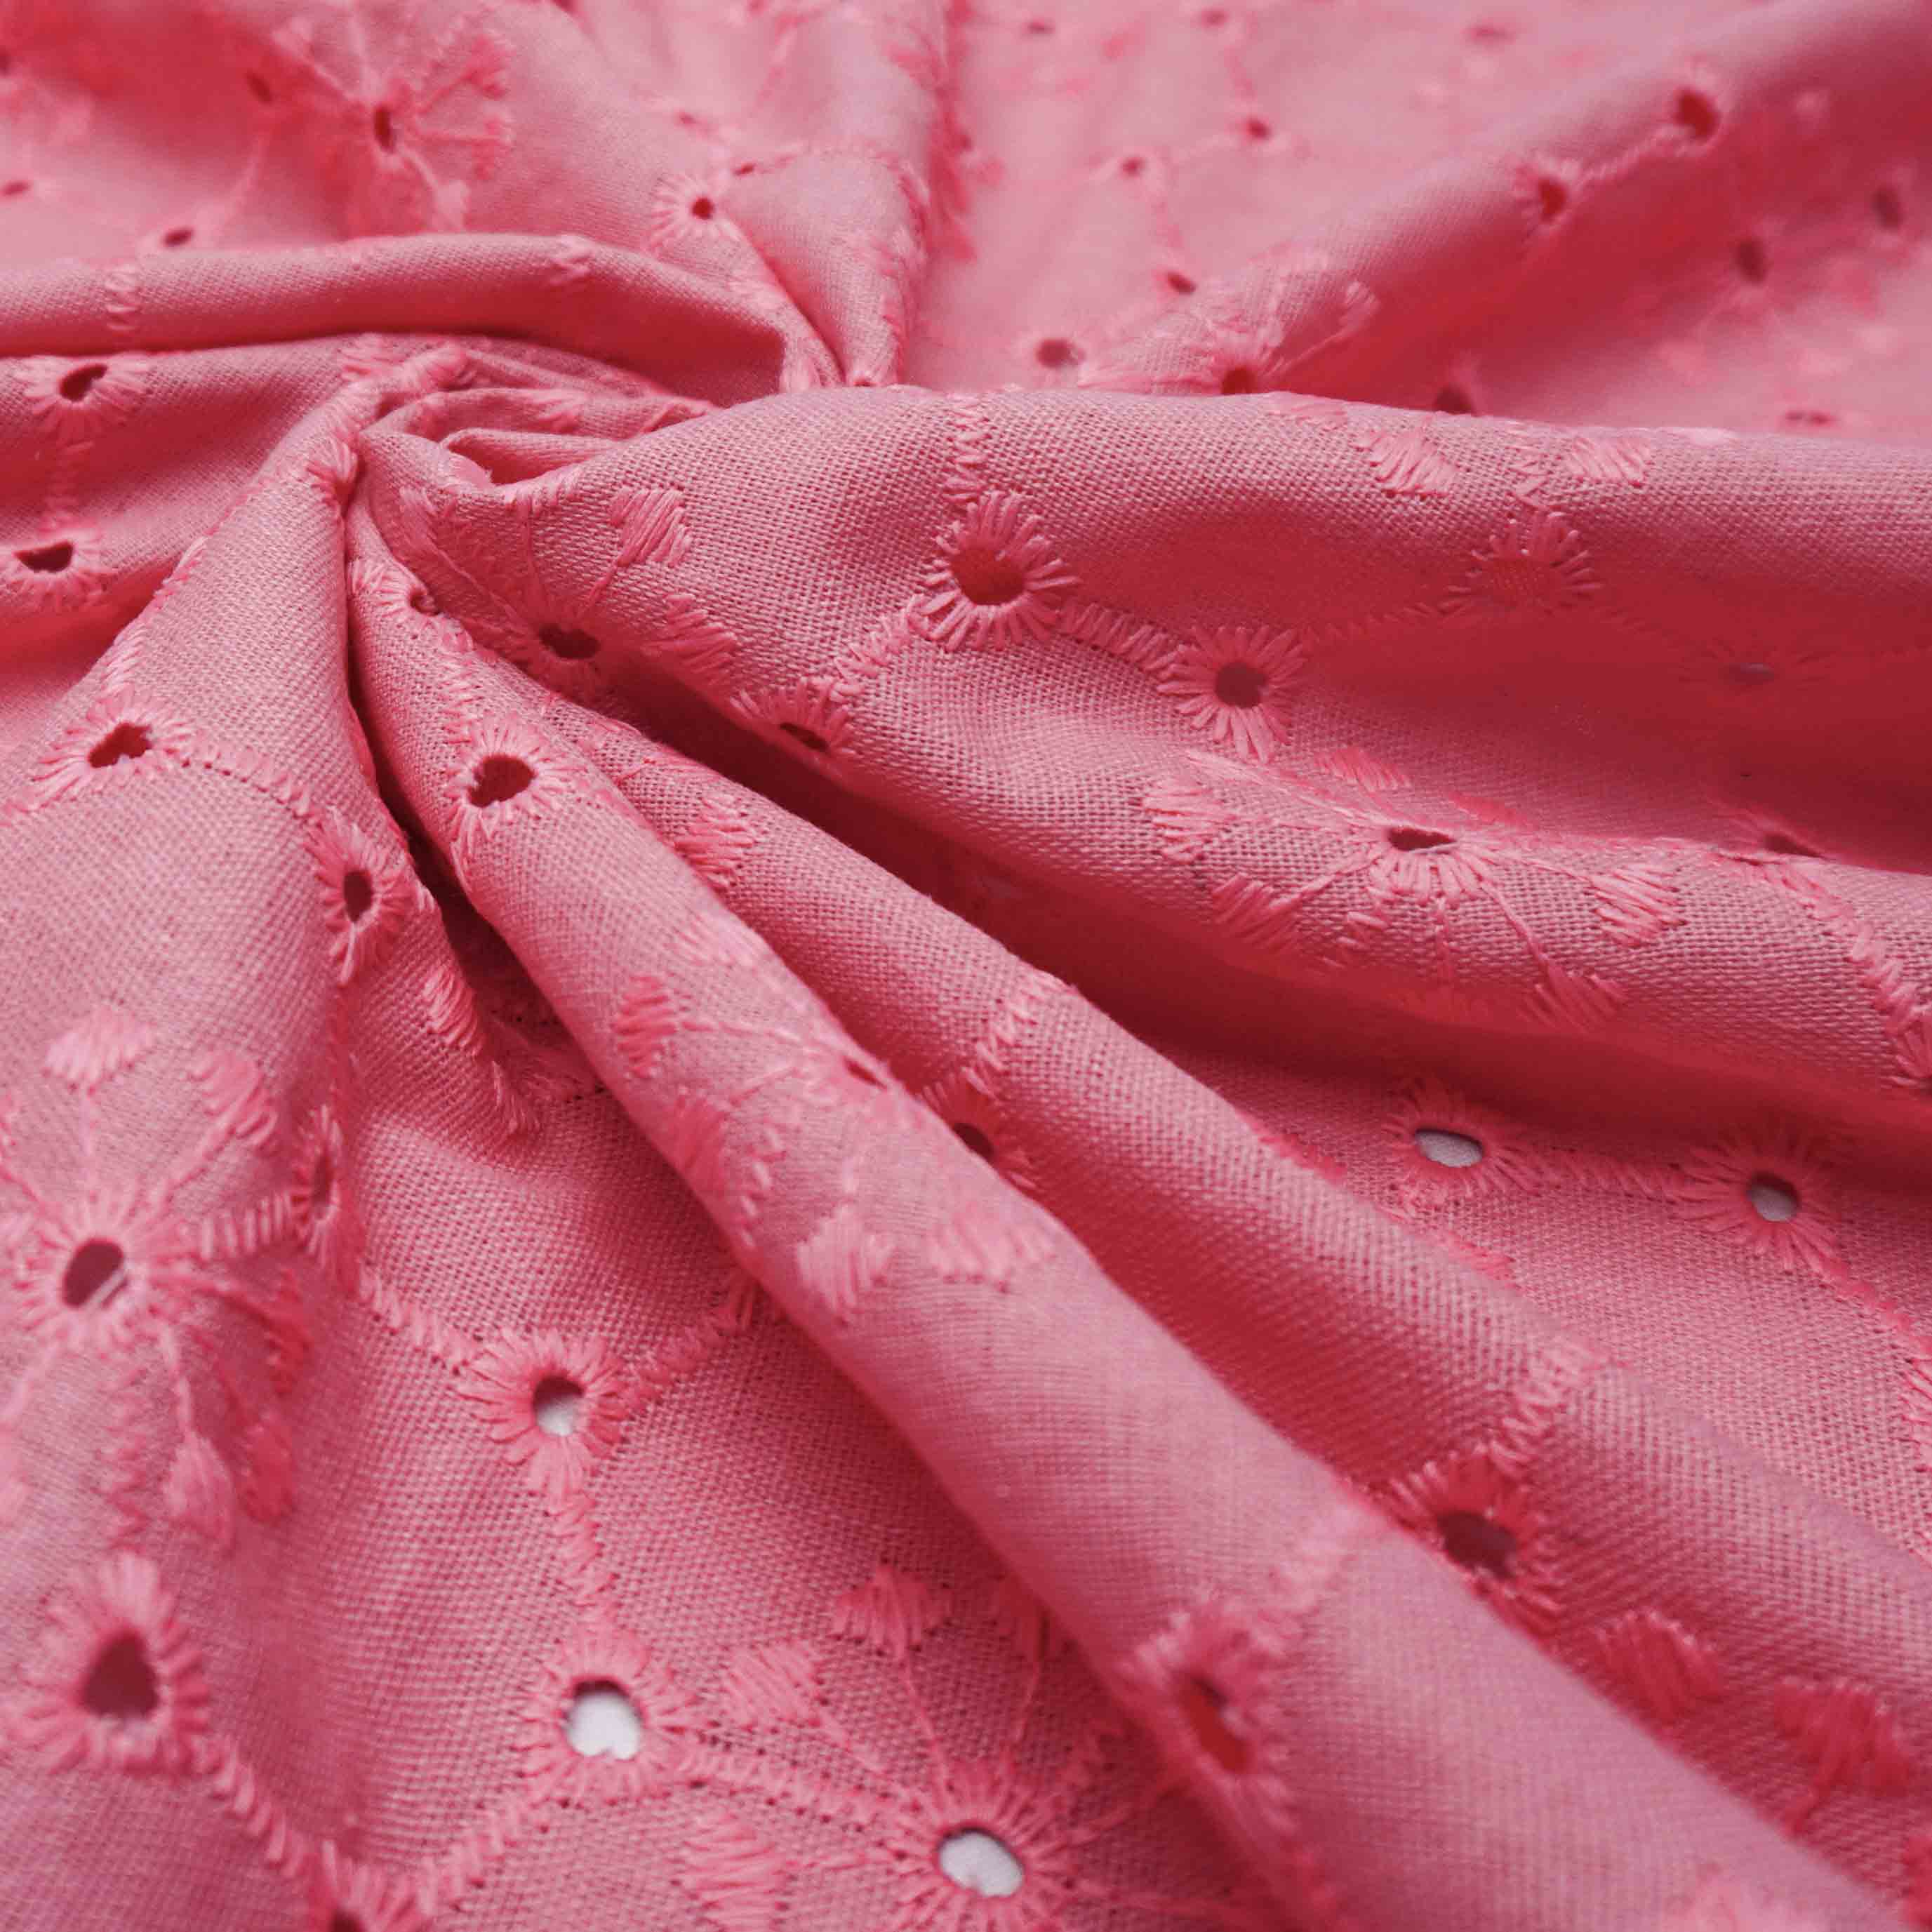 Tecido linho misto bordado (laise) rosa chiclete